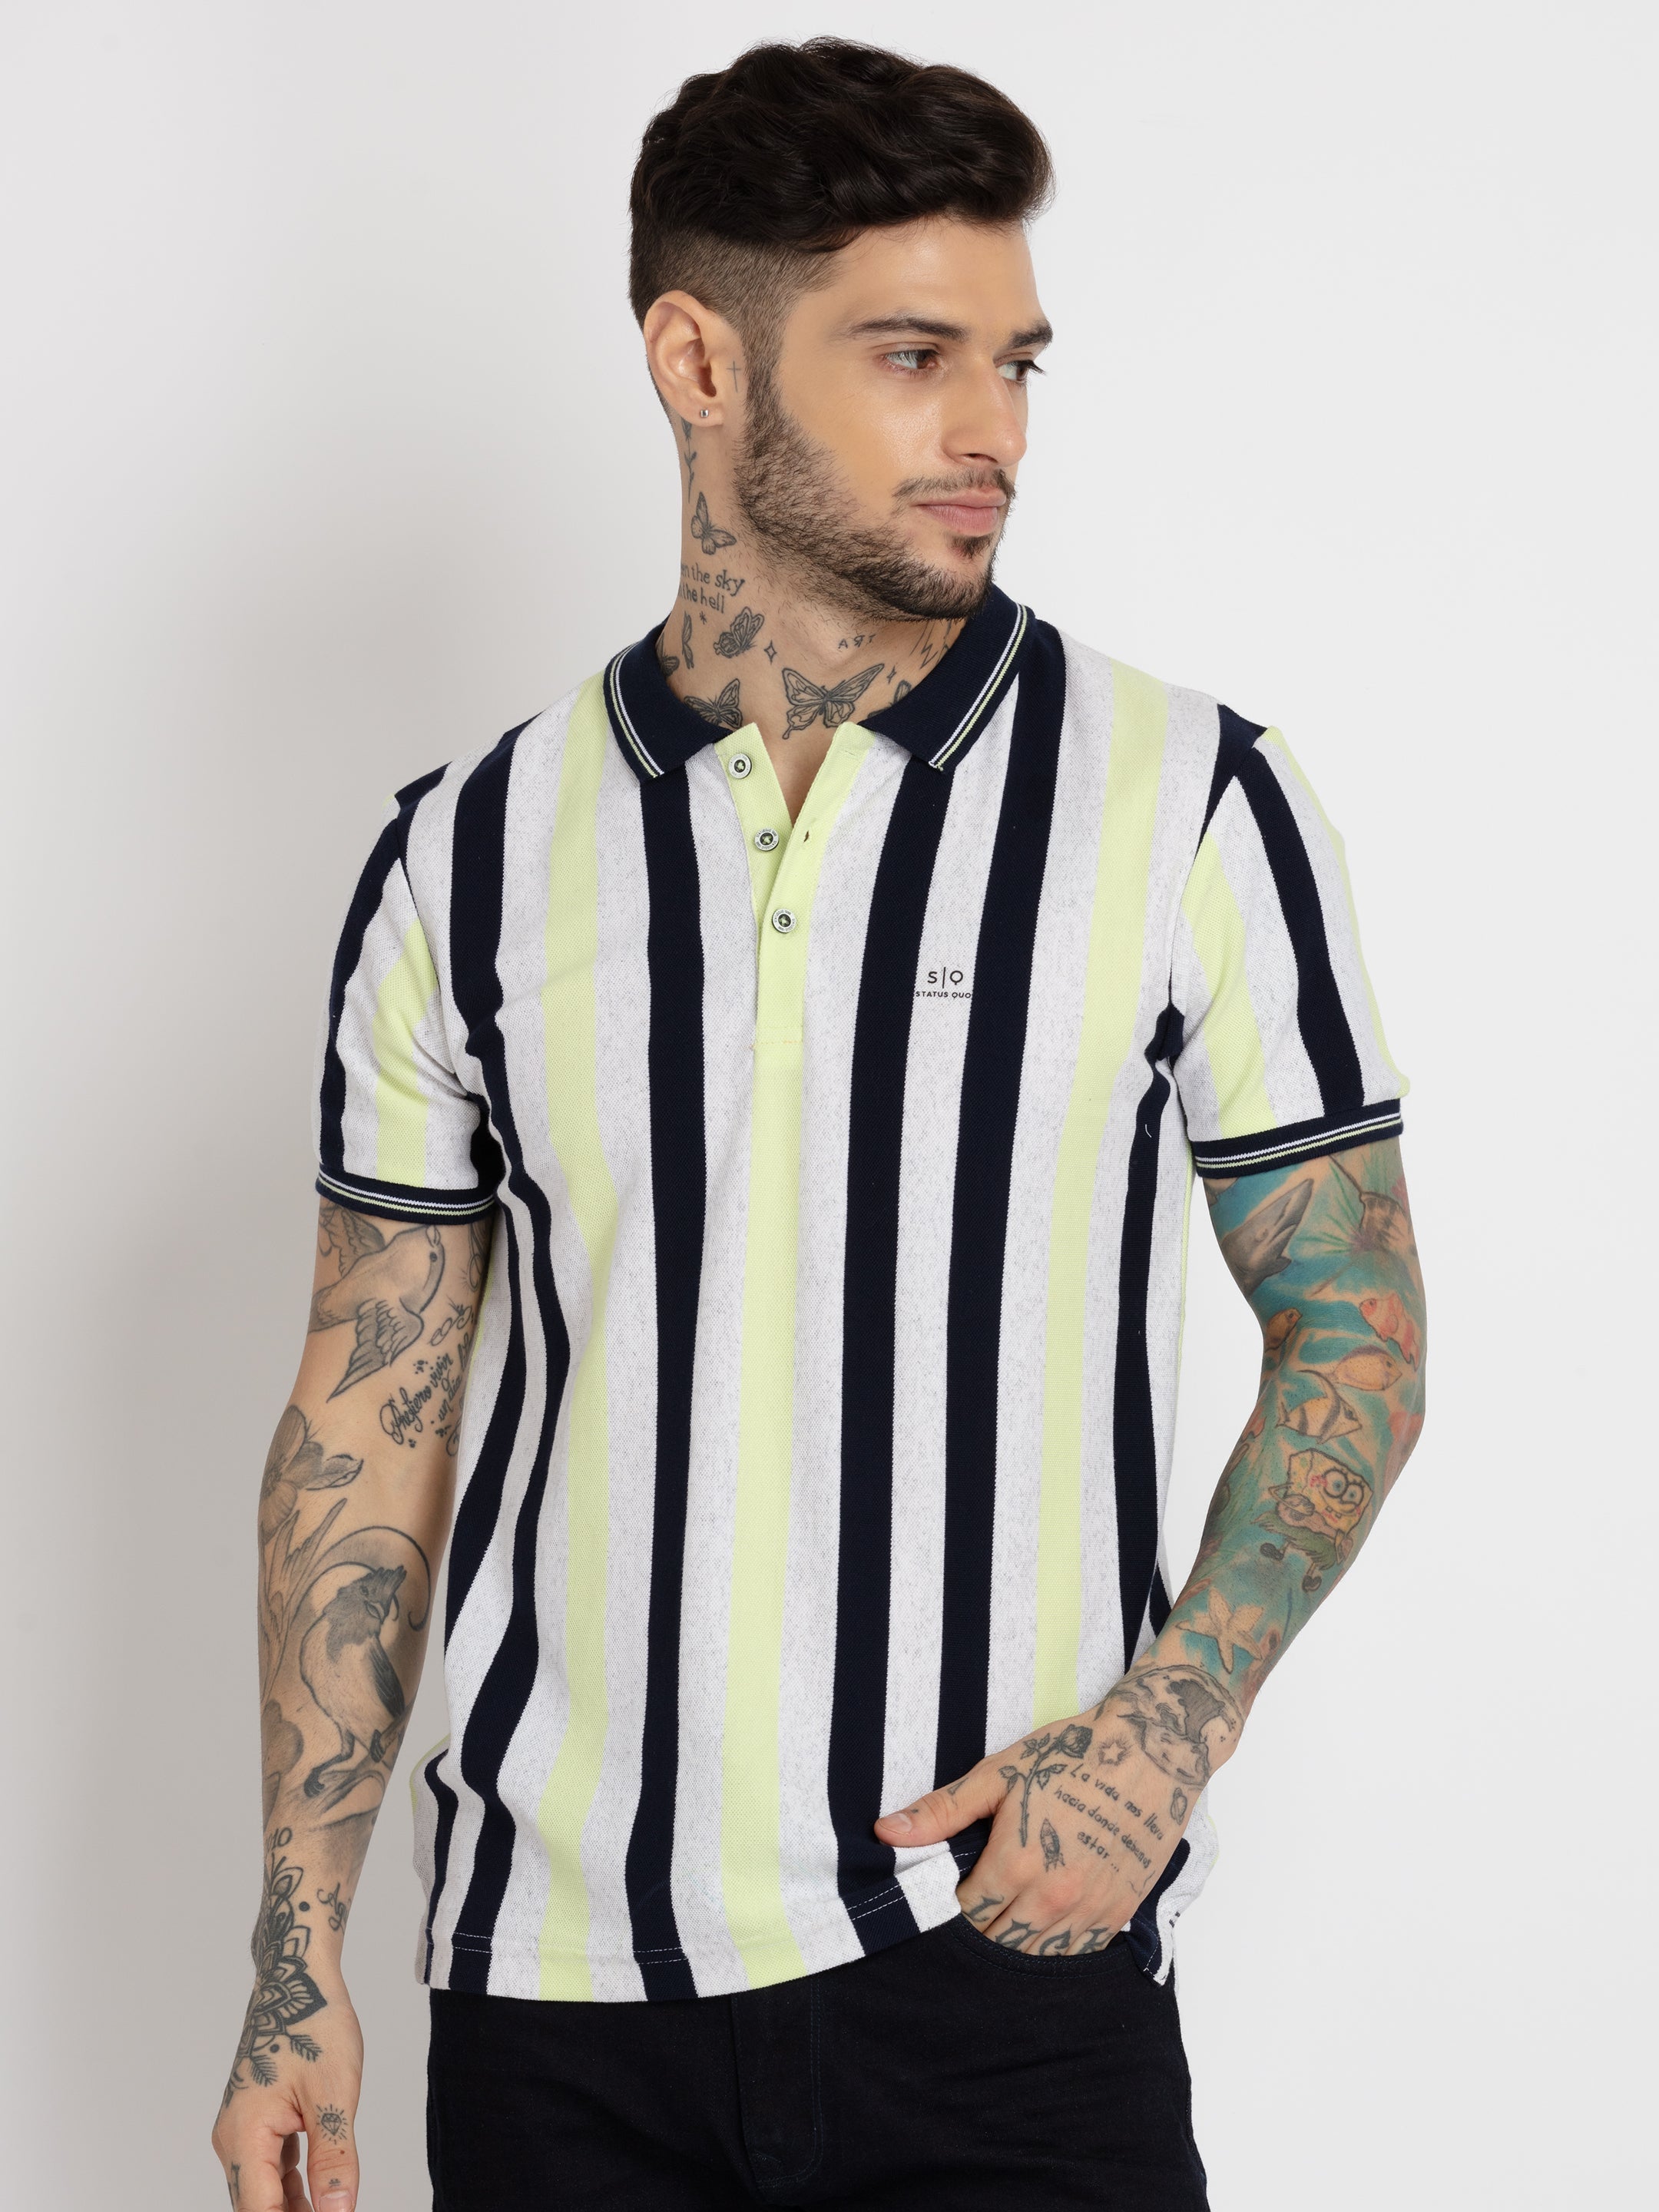 Striped polo t shirt